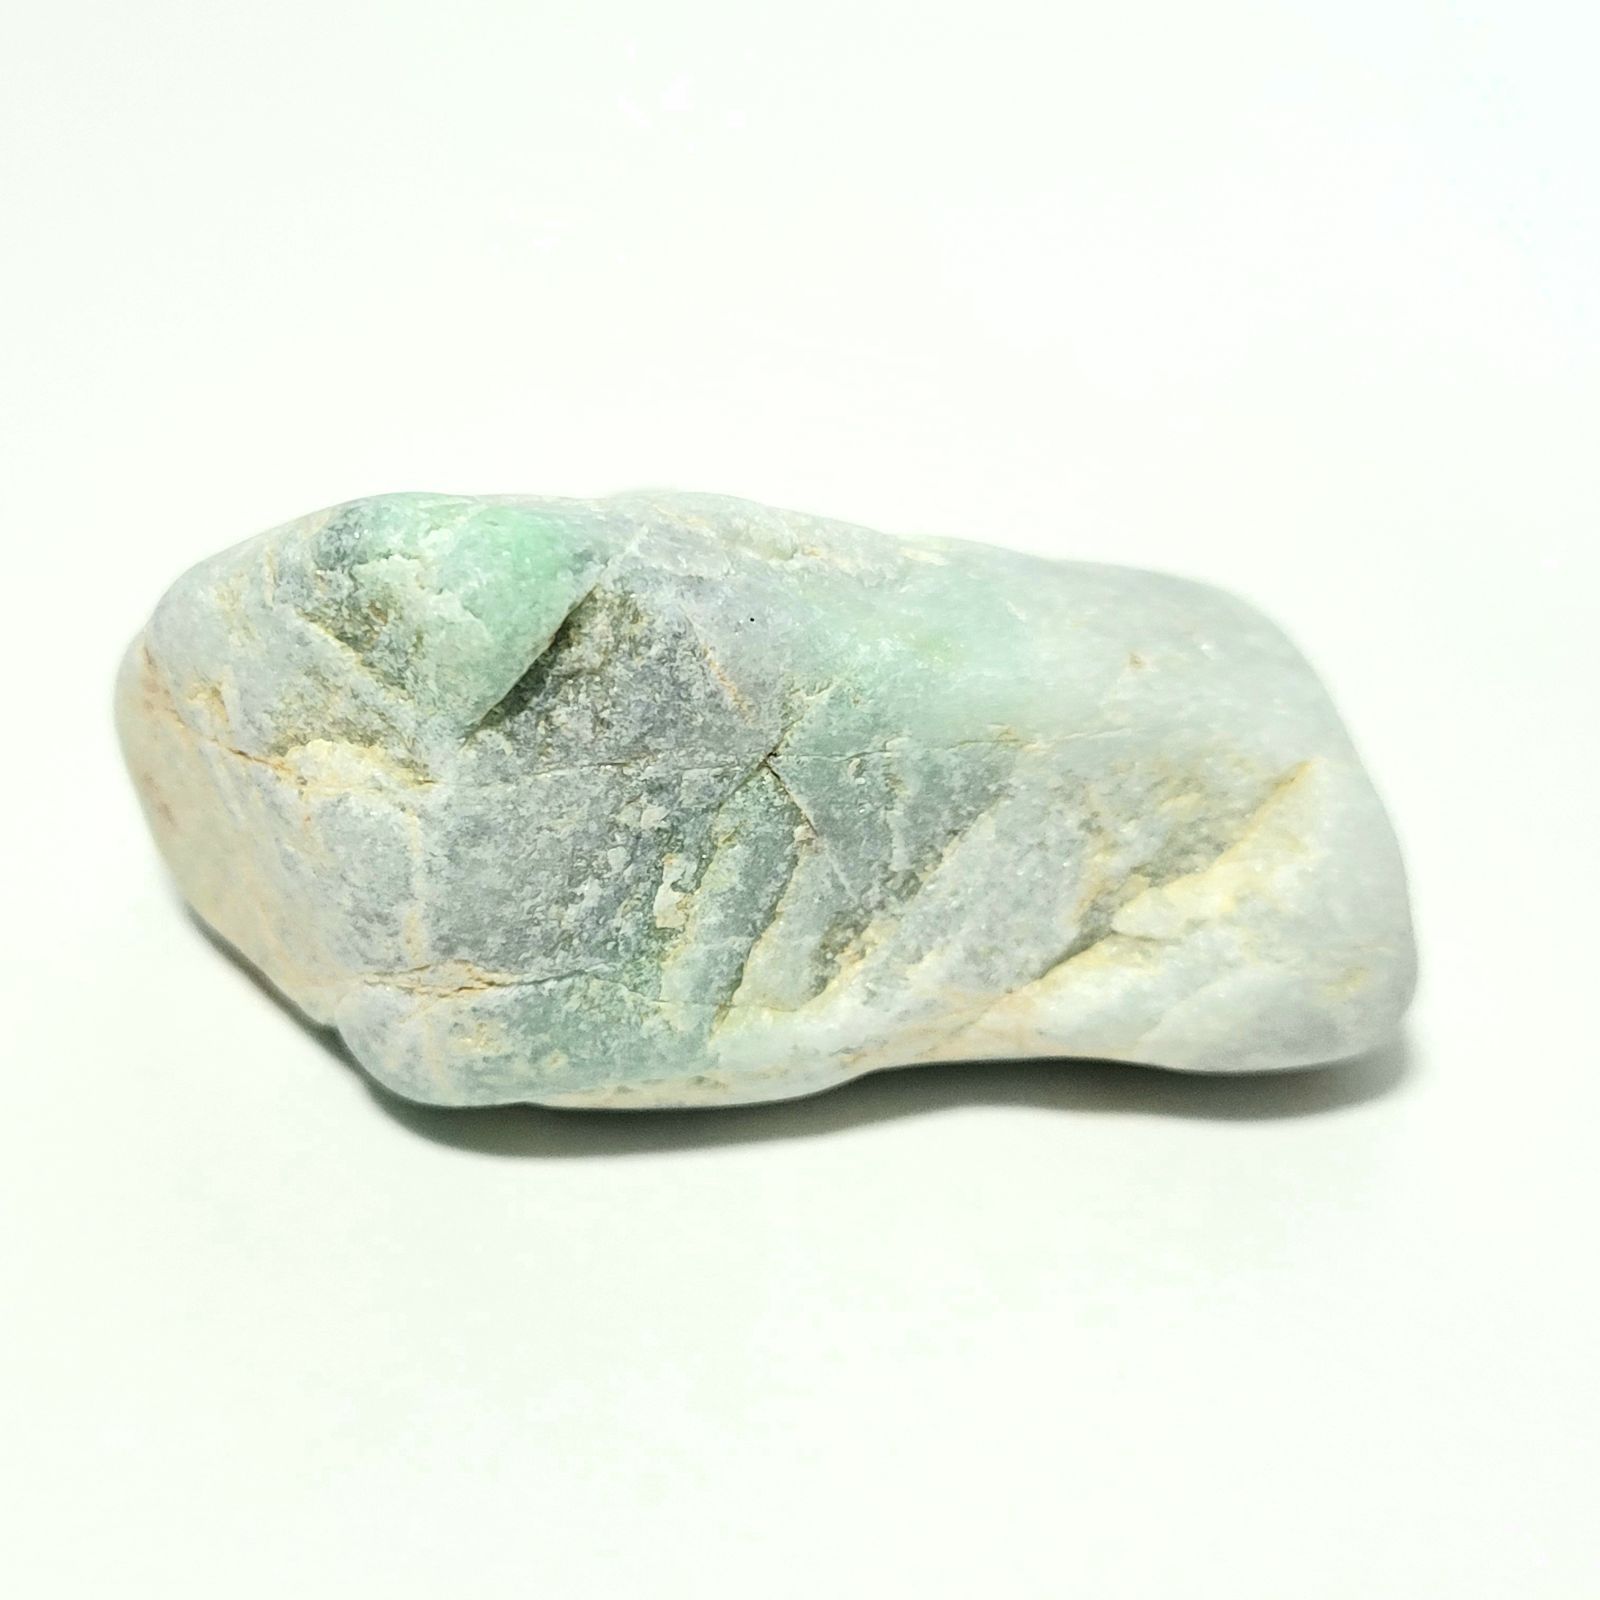 糸魚川翡翠:原石:海石 ms-GU0004 - 糸魚川翡翠工房・和 - メルカリ